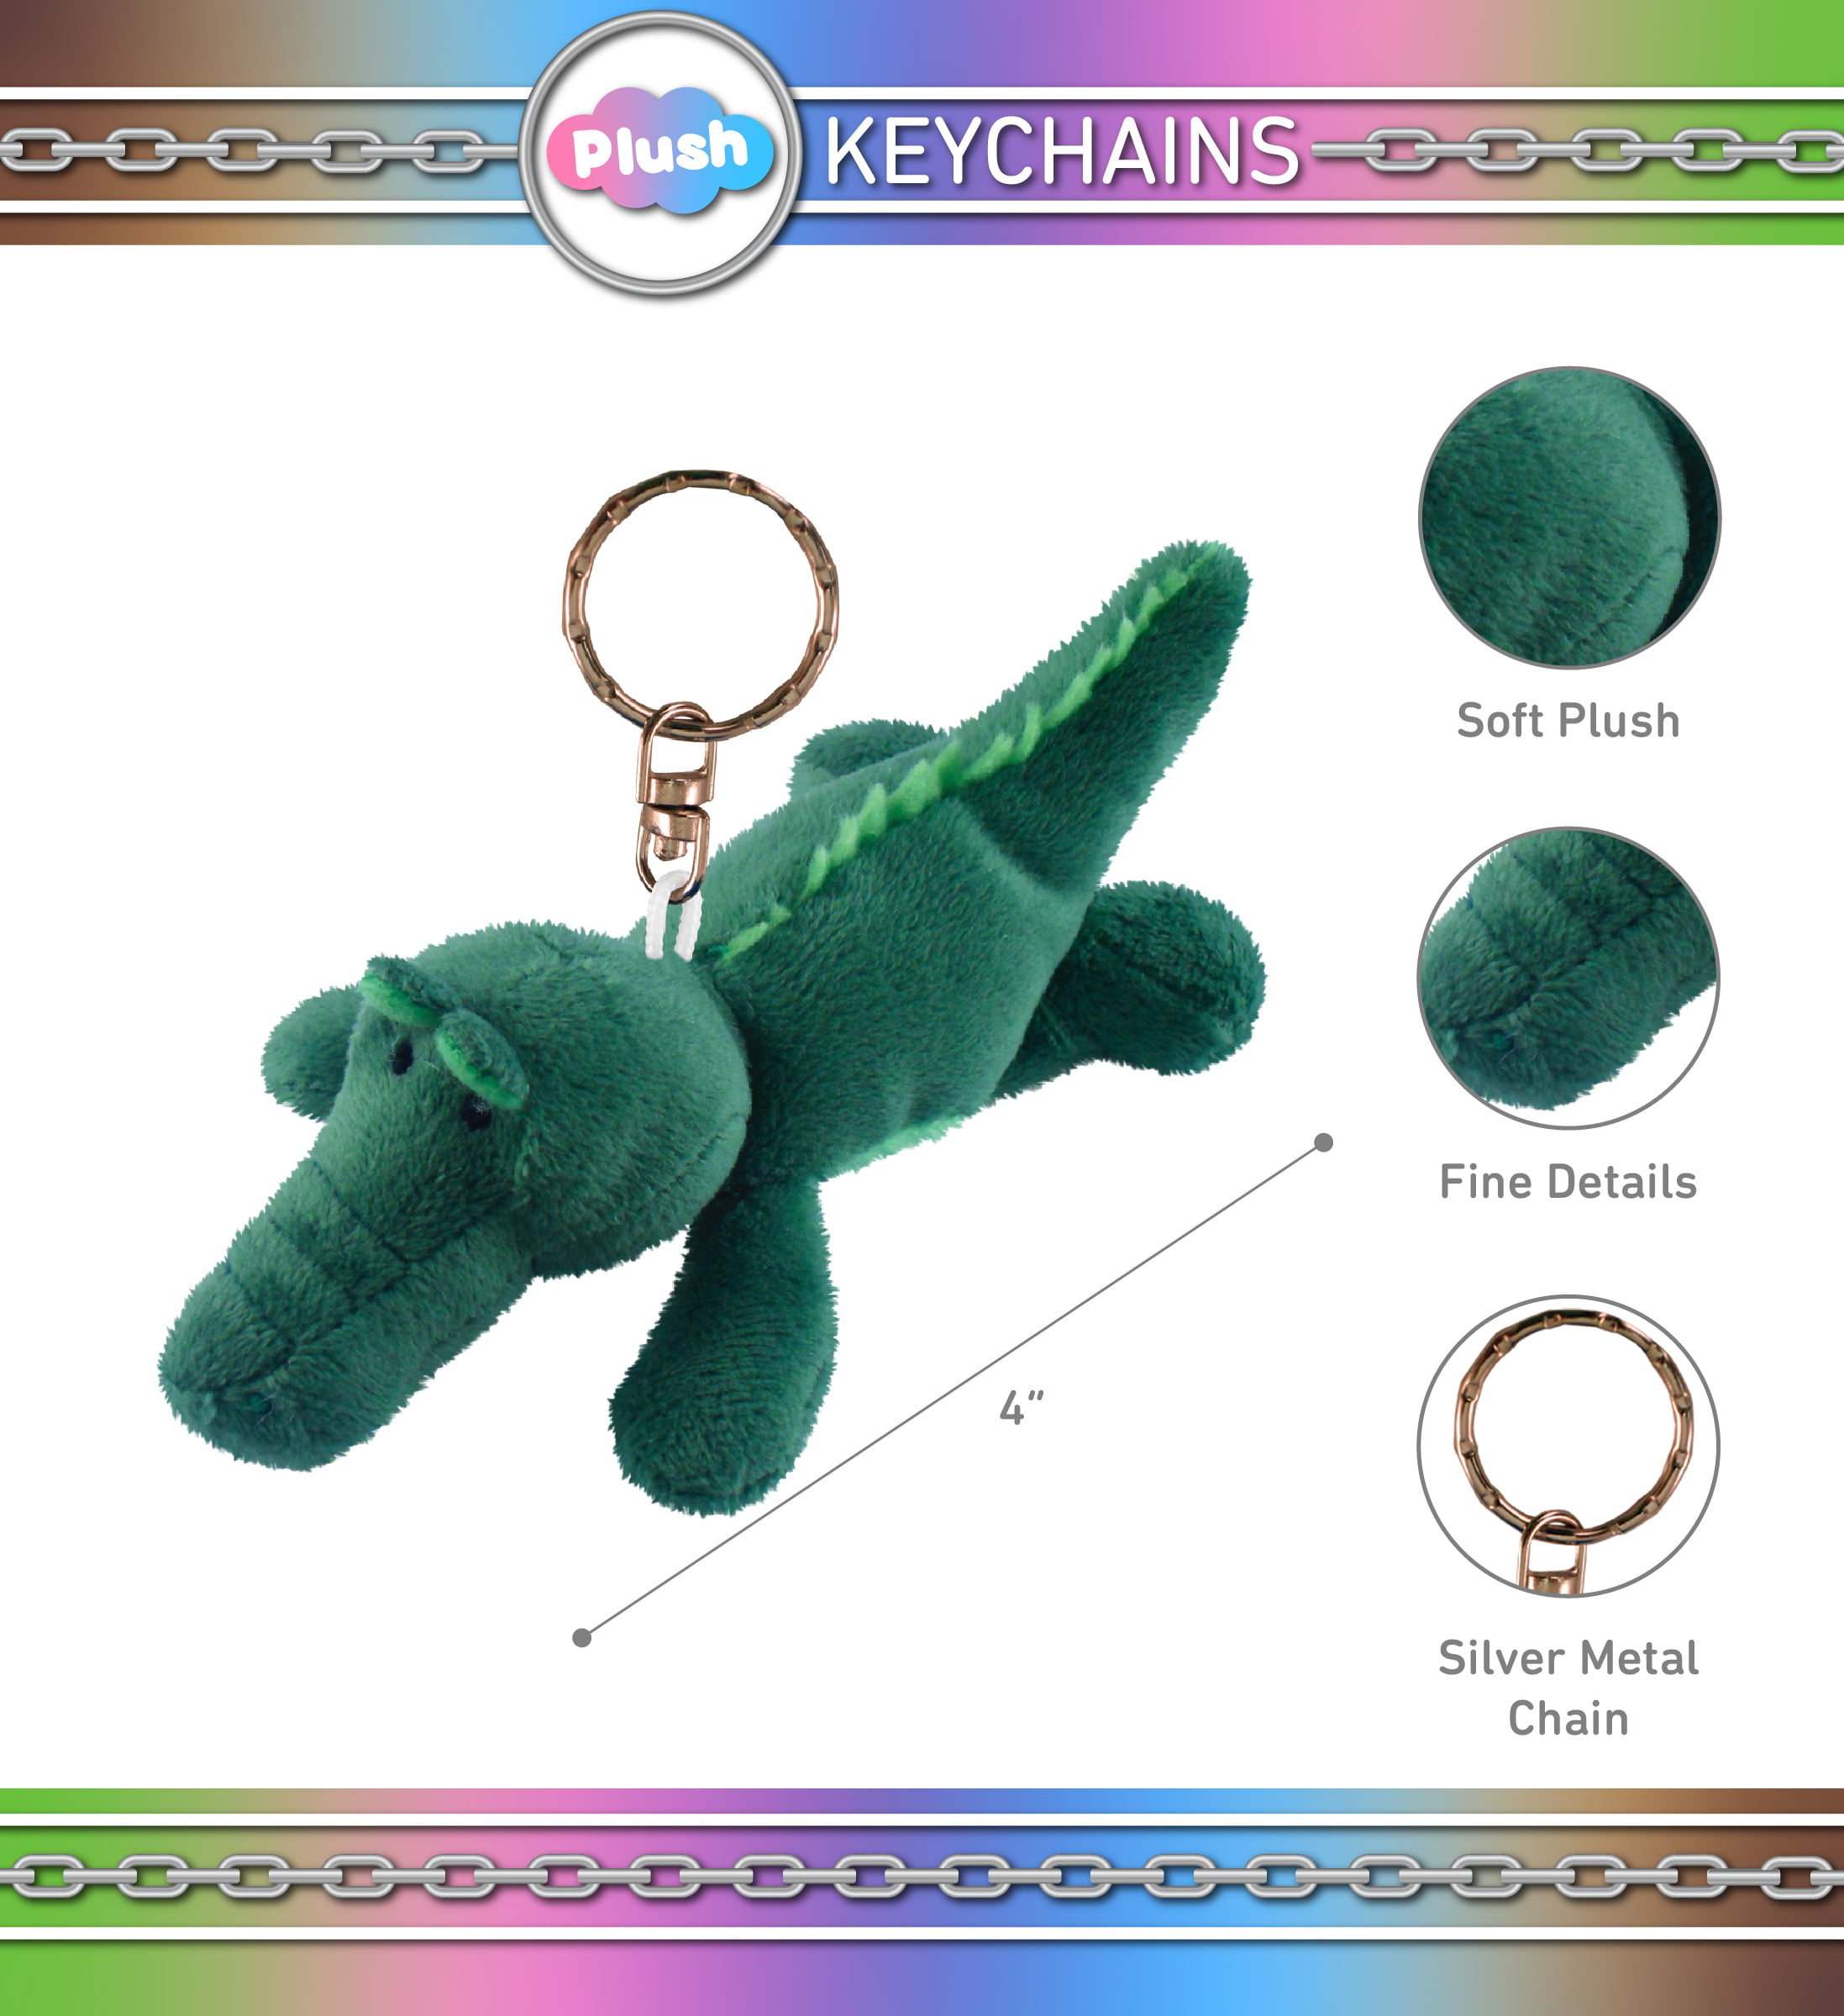 Puzzled Alligator Plush Keychain Stuffed Animal Toy - Soft Fur Wild Life  Animal Green Crocodile Charm Keyring, Decorative Plush Toy Accessory Fun